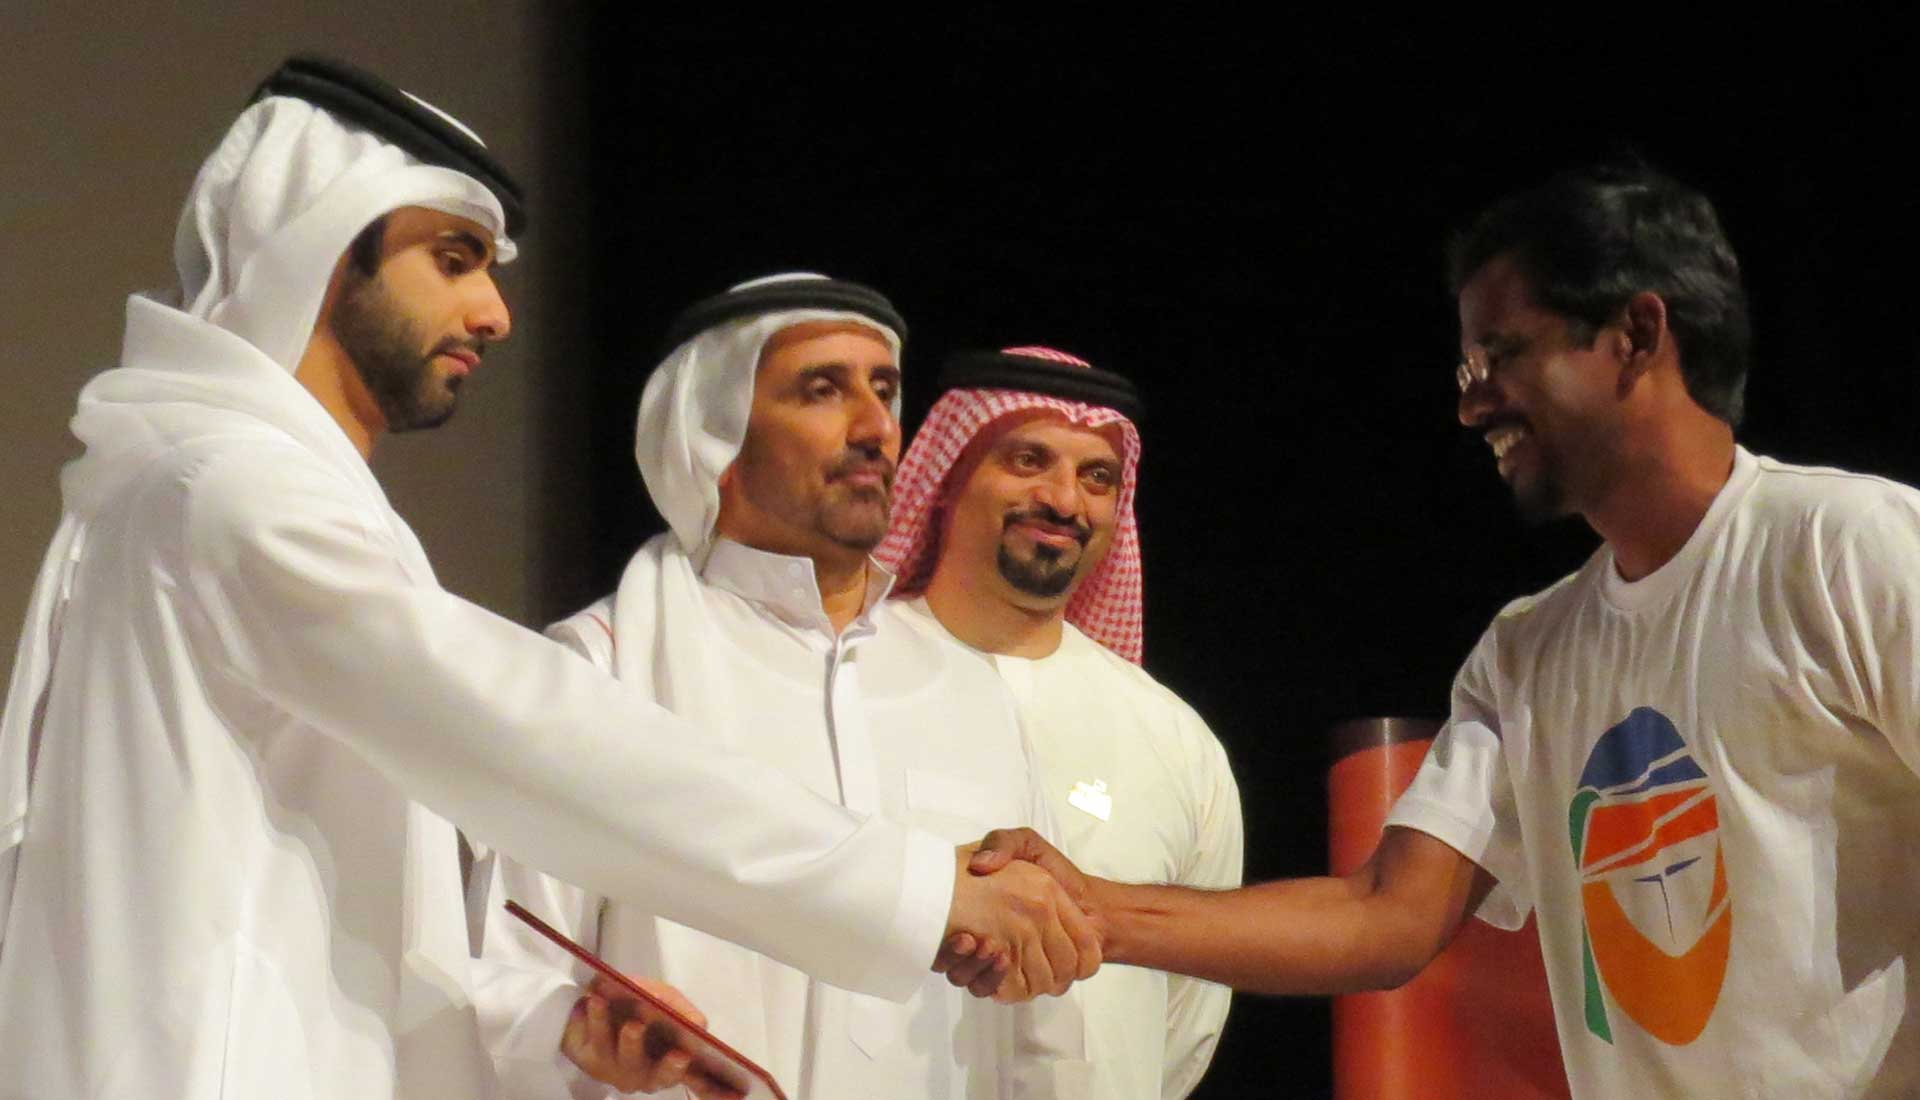 Felicitation by Prince of Dubai - Sheik Mansour bin Mohammad Al Maktoum